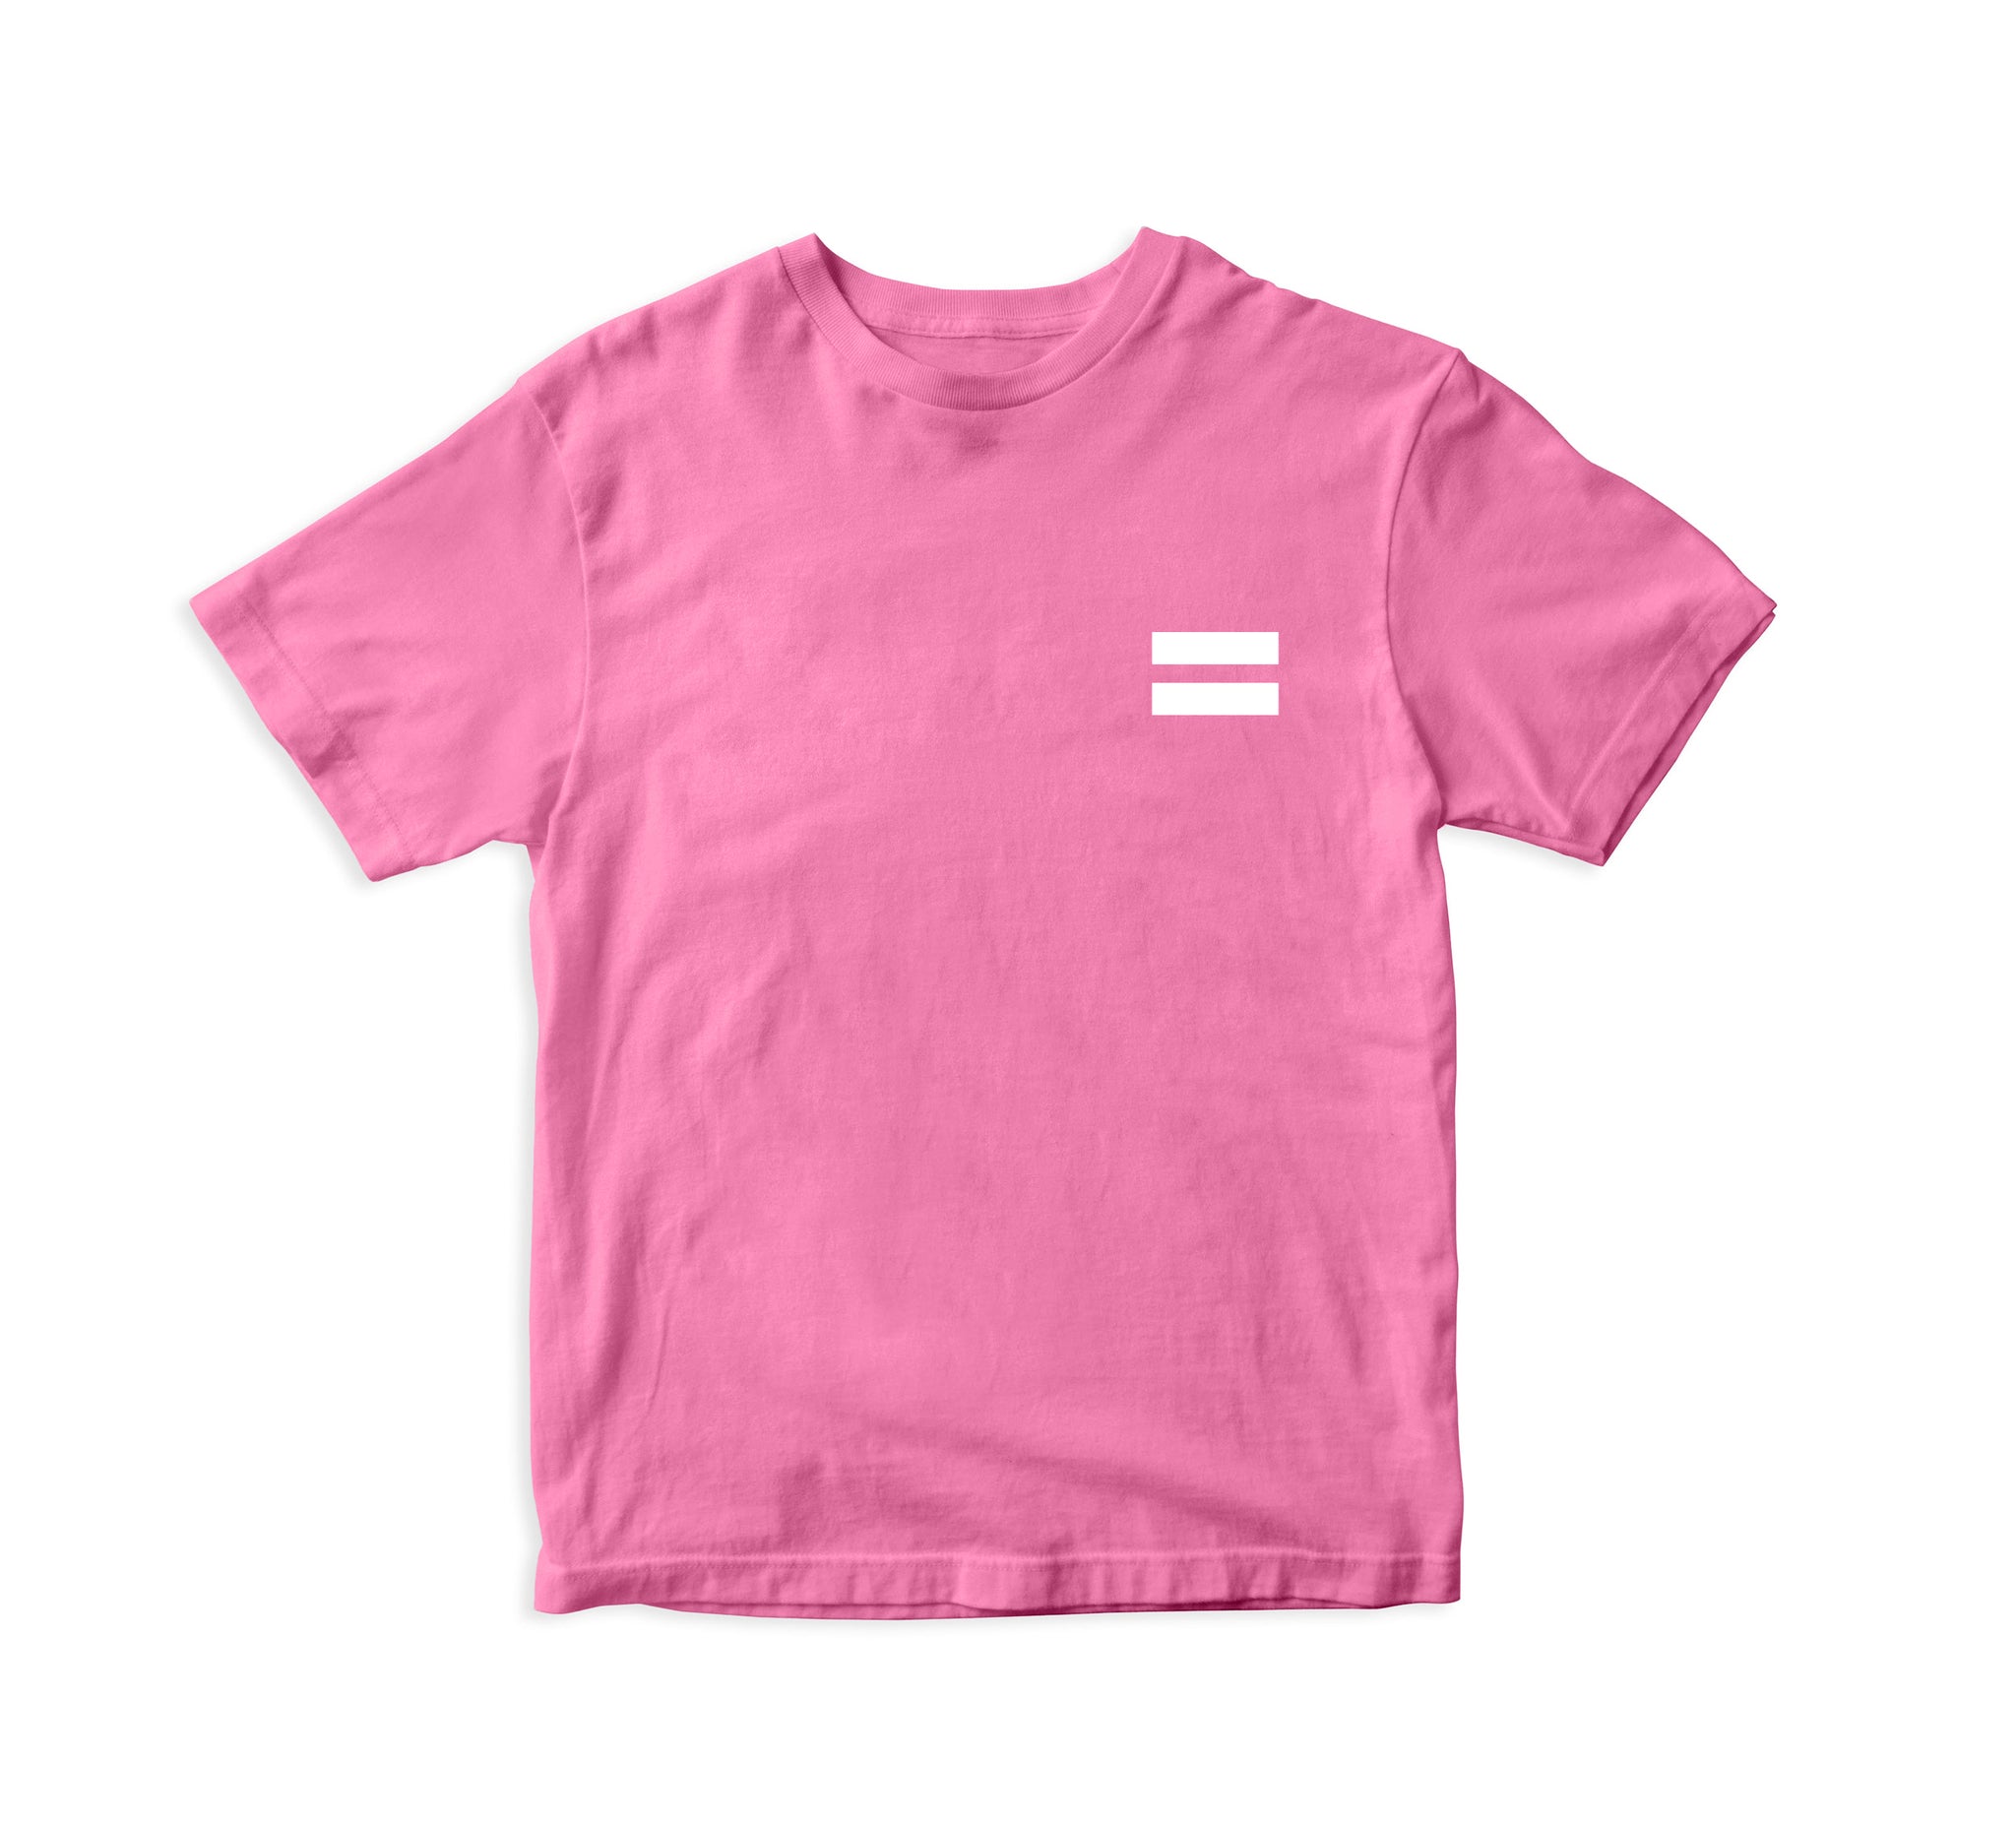 No Homophobia T-Shirt - Pink Watermelon